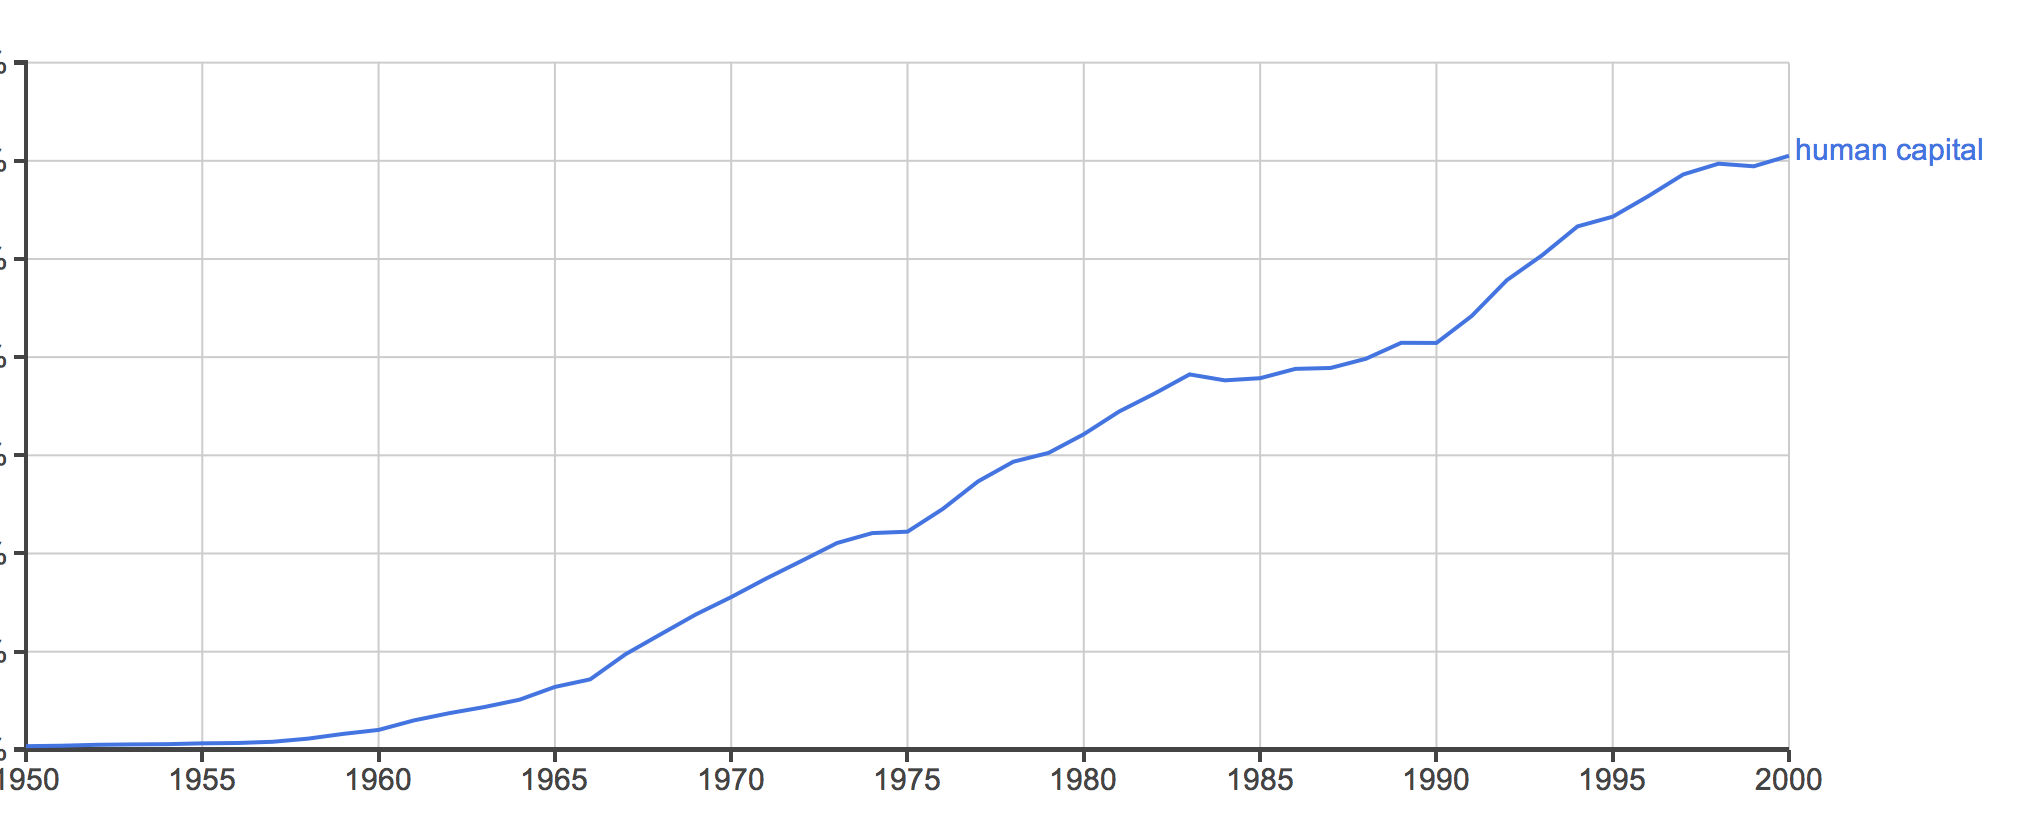 Human capital ngram 1950 to 2000